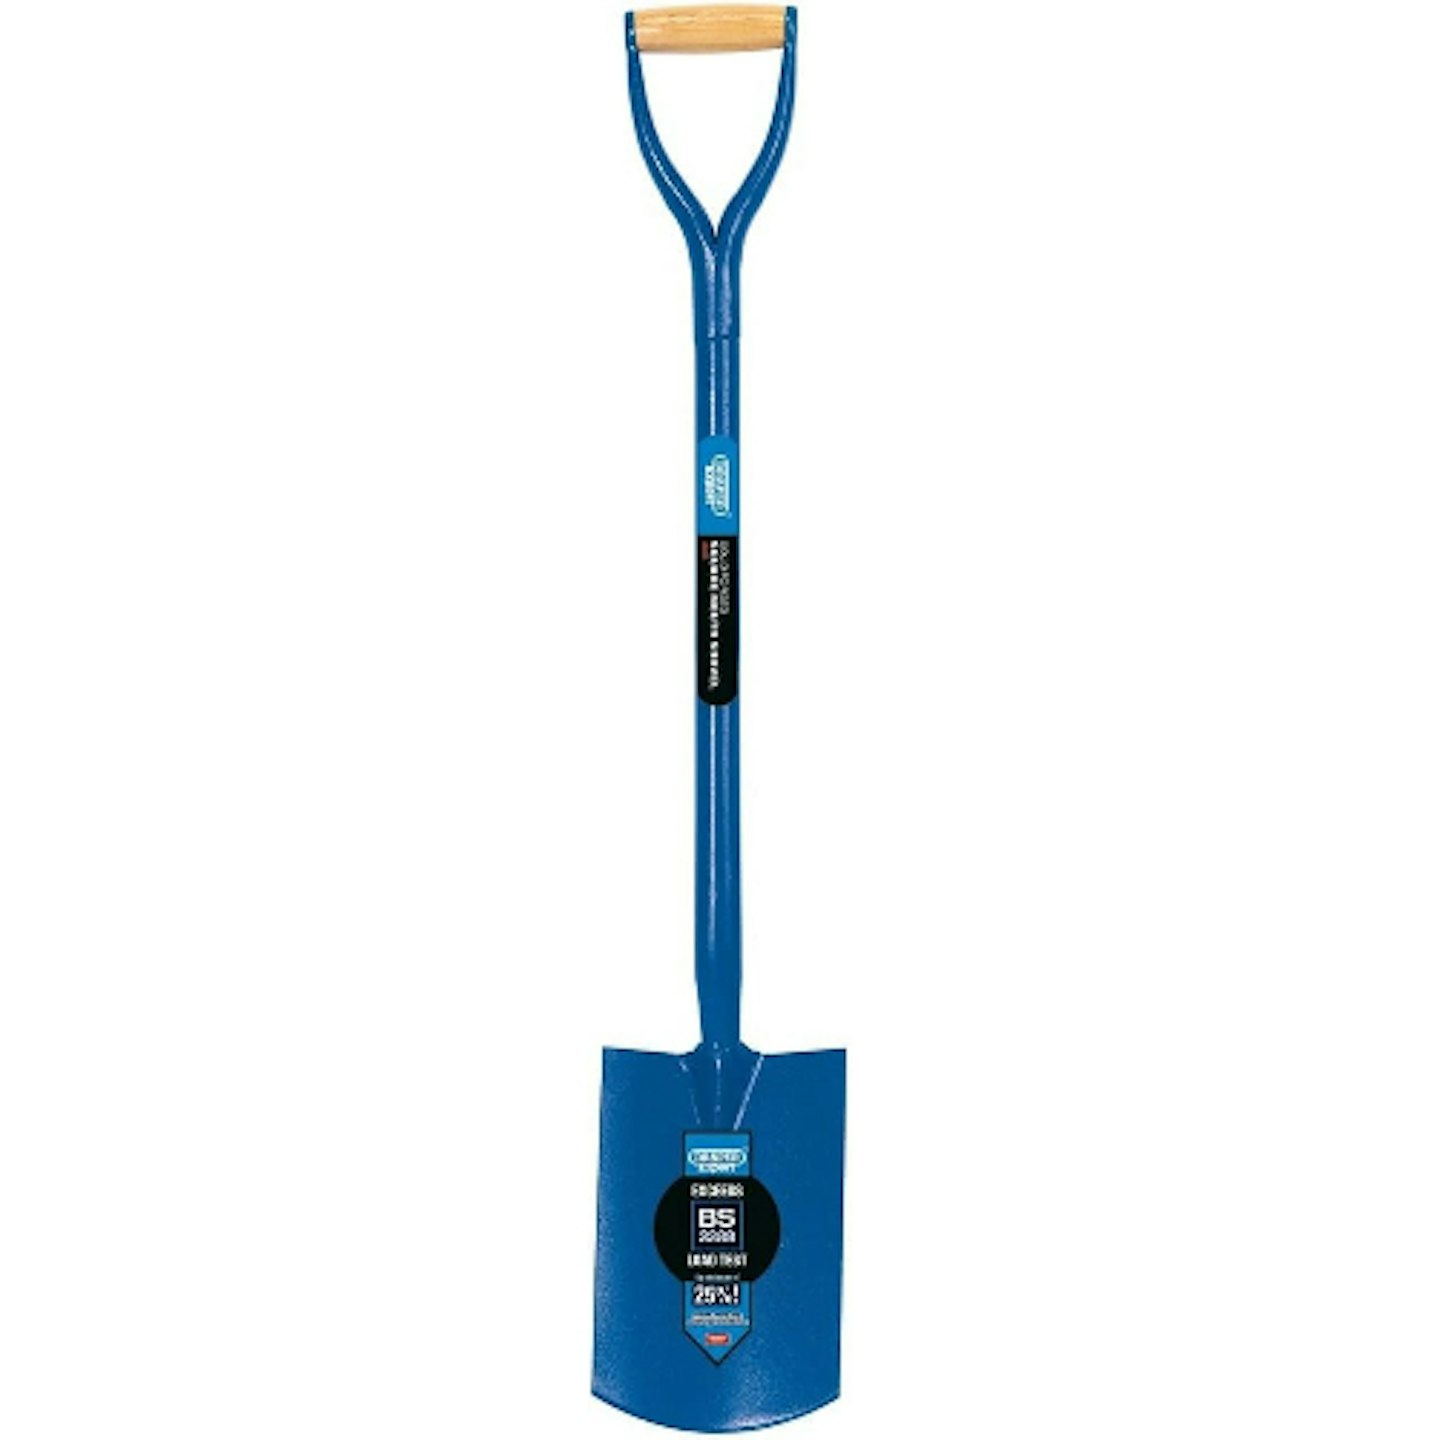 Draper shovel 